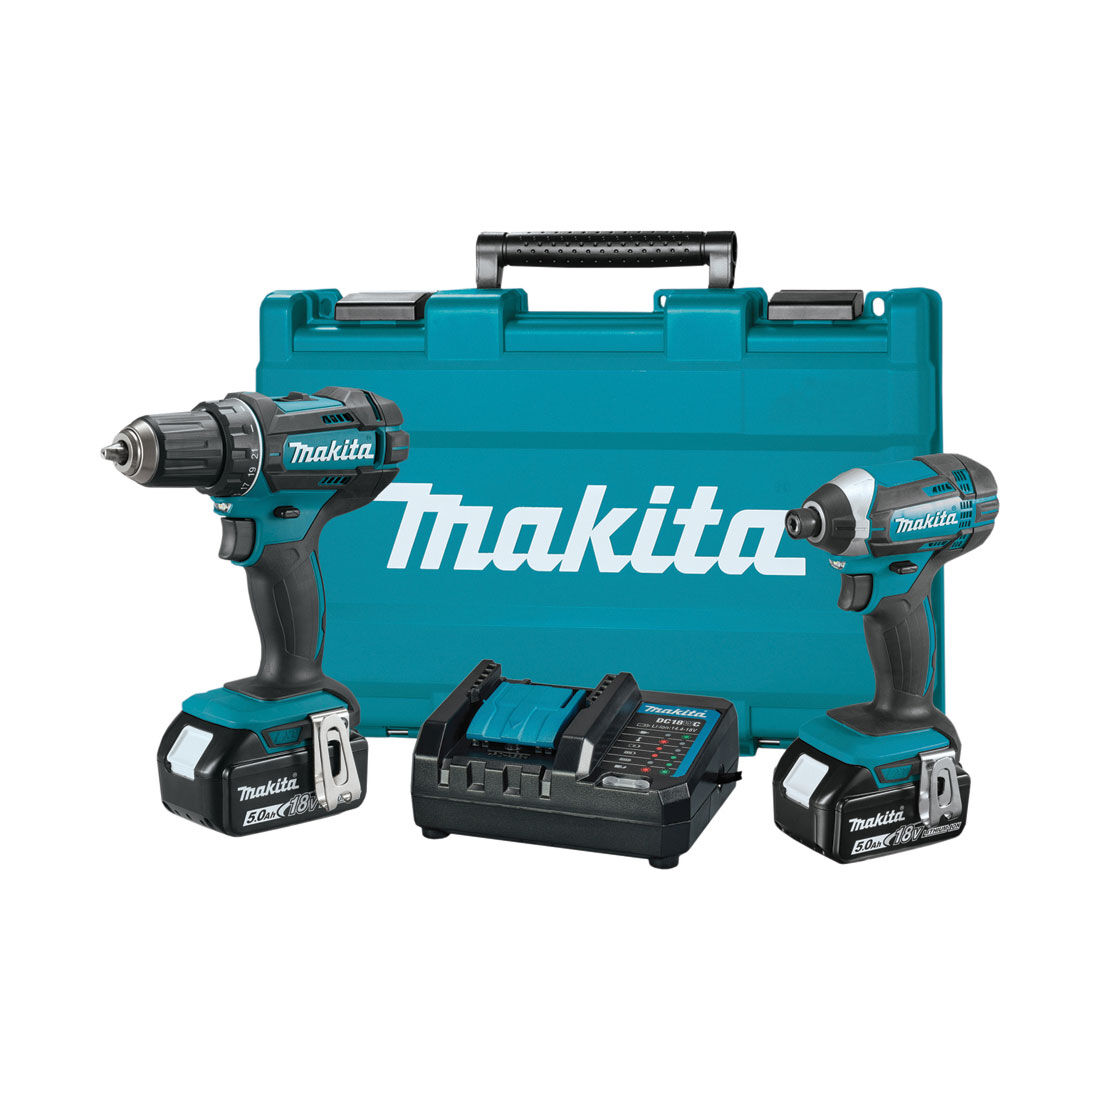 Makita 18V 2 Piece Drill Driver And Impact Driver Kit, , scanz_hi-res